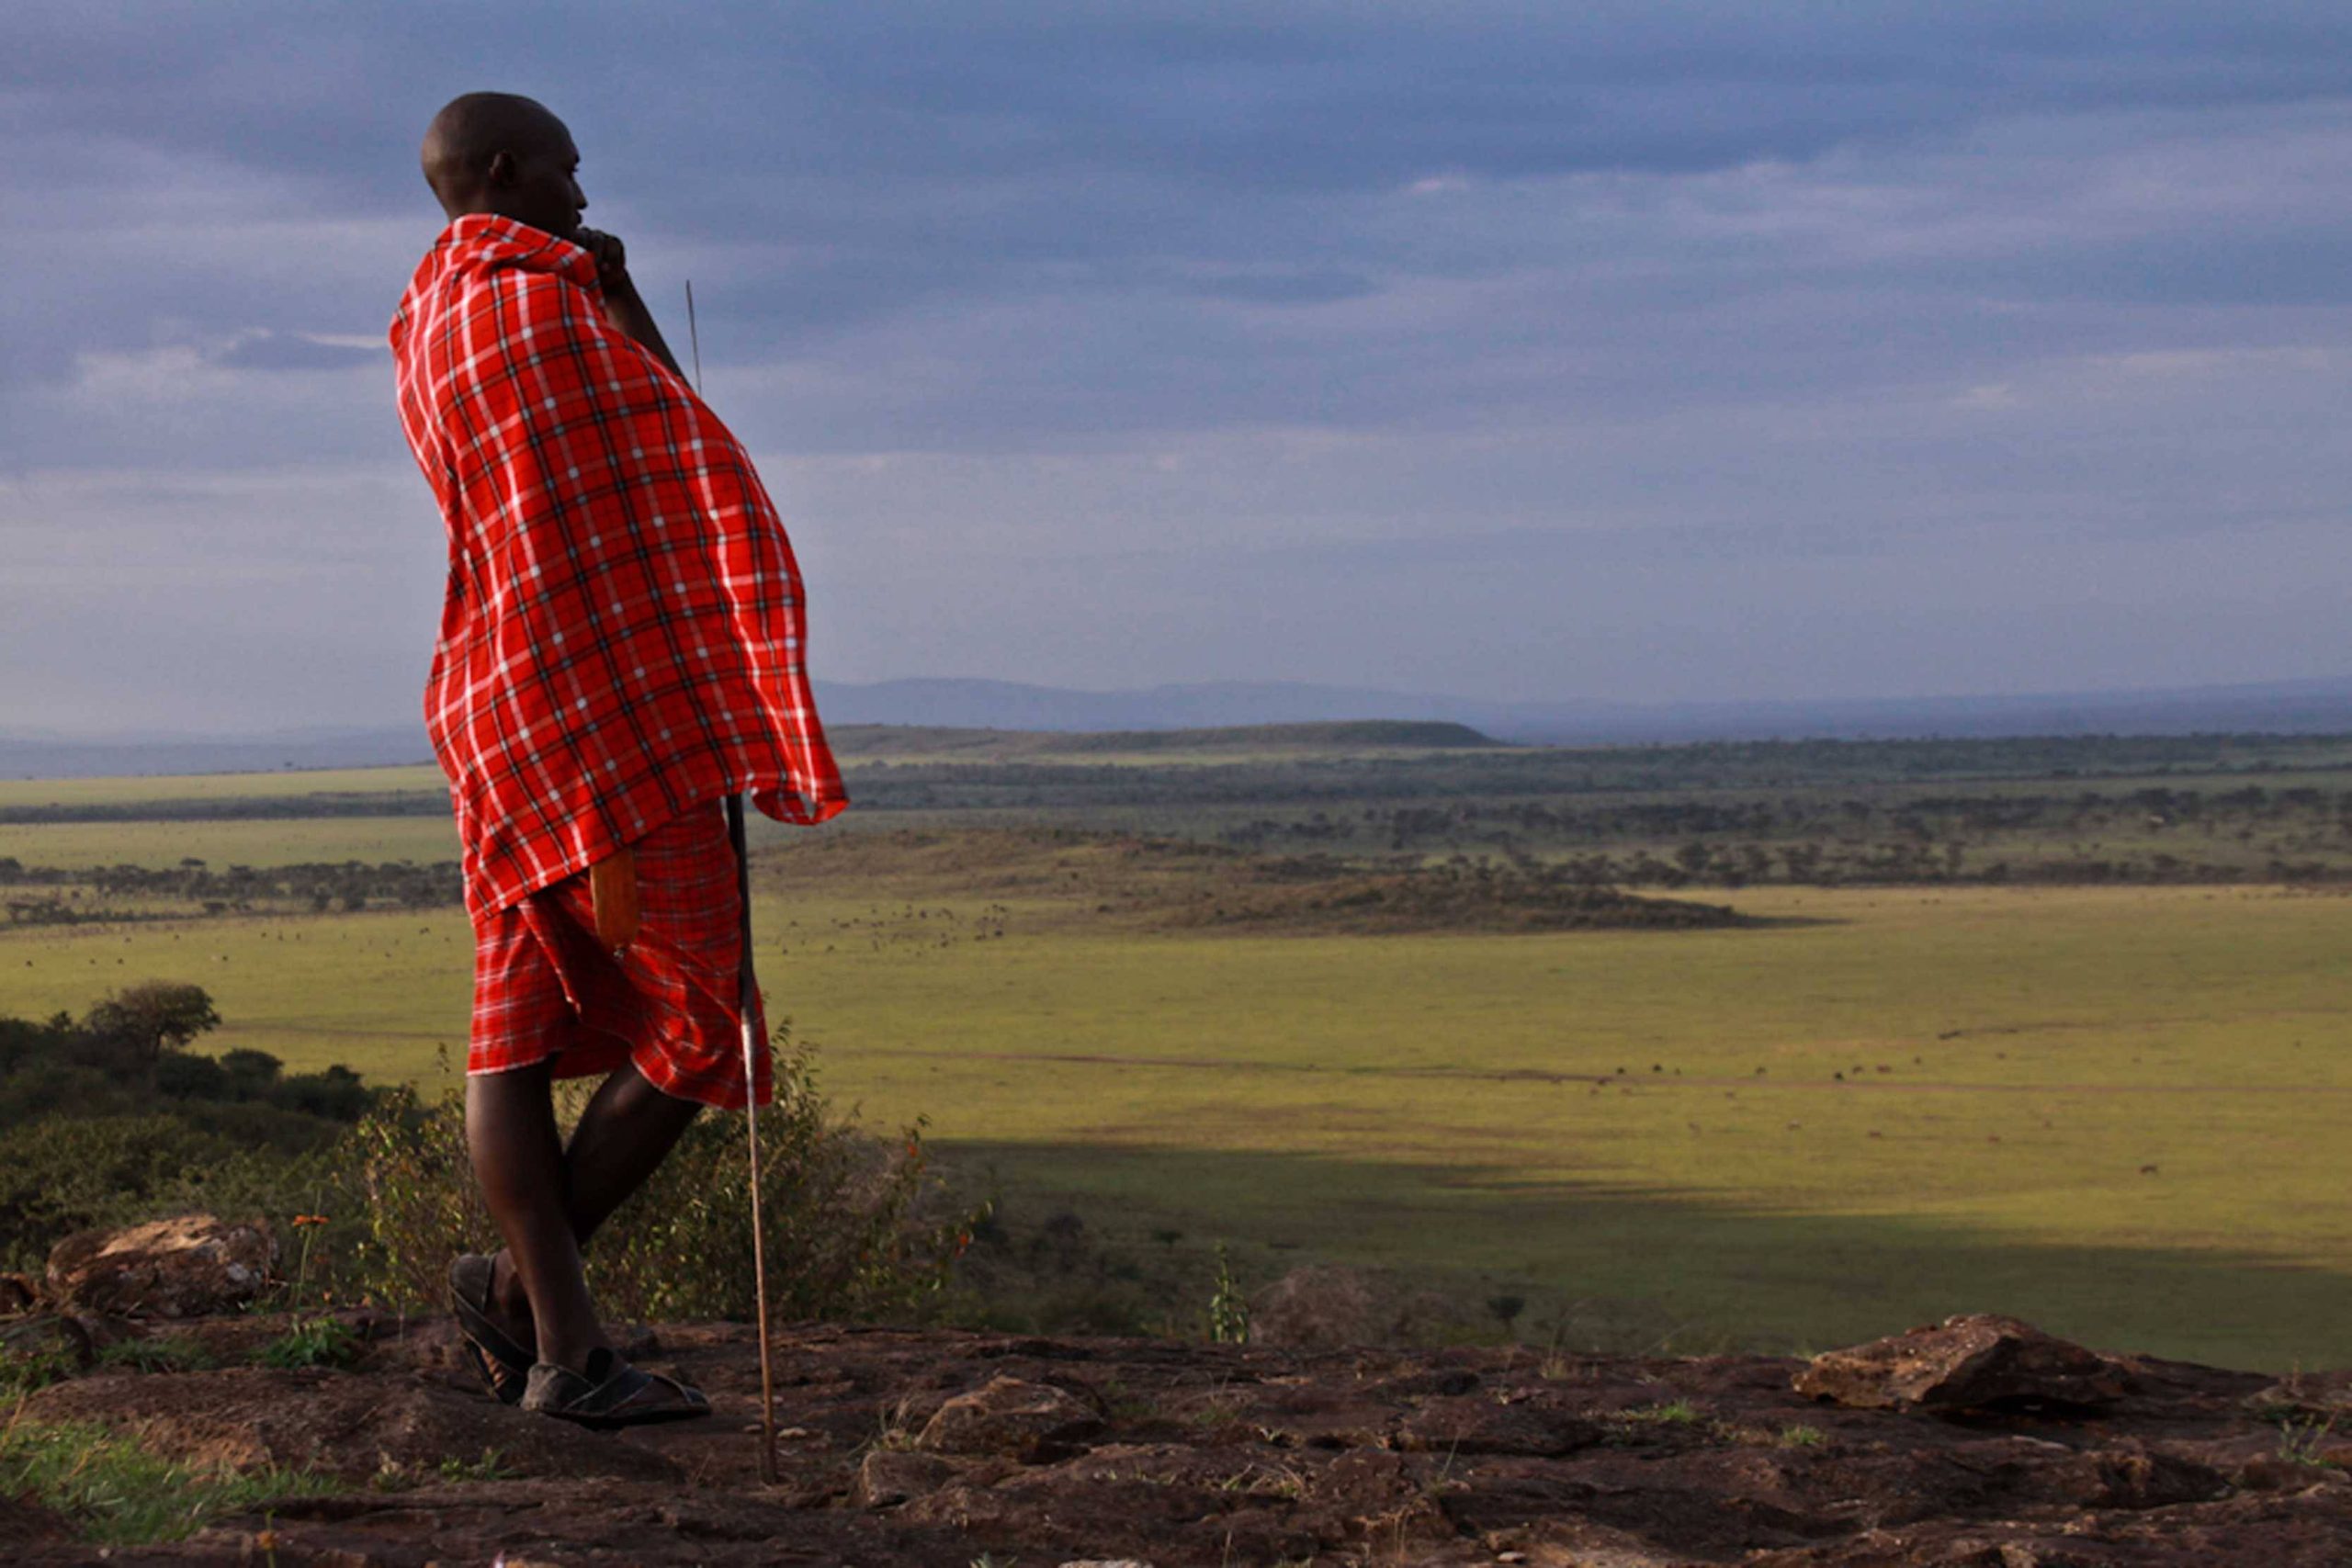 Masaai Mara warrior overlooking the plains near East Africa's Masaai Mara National Park